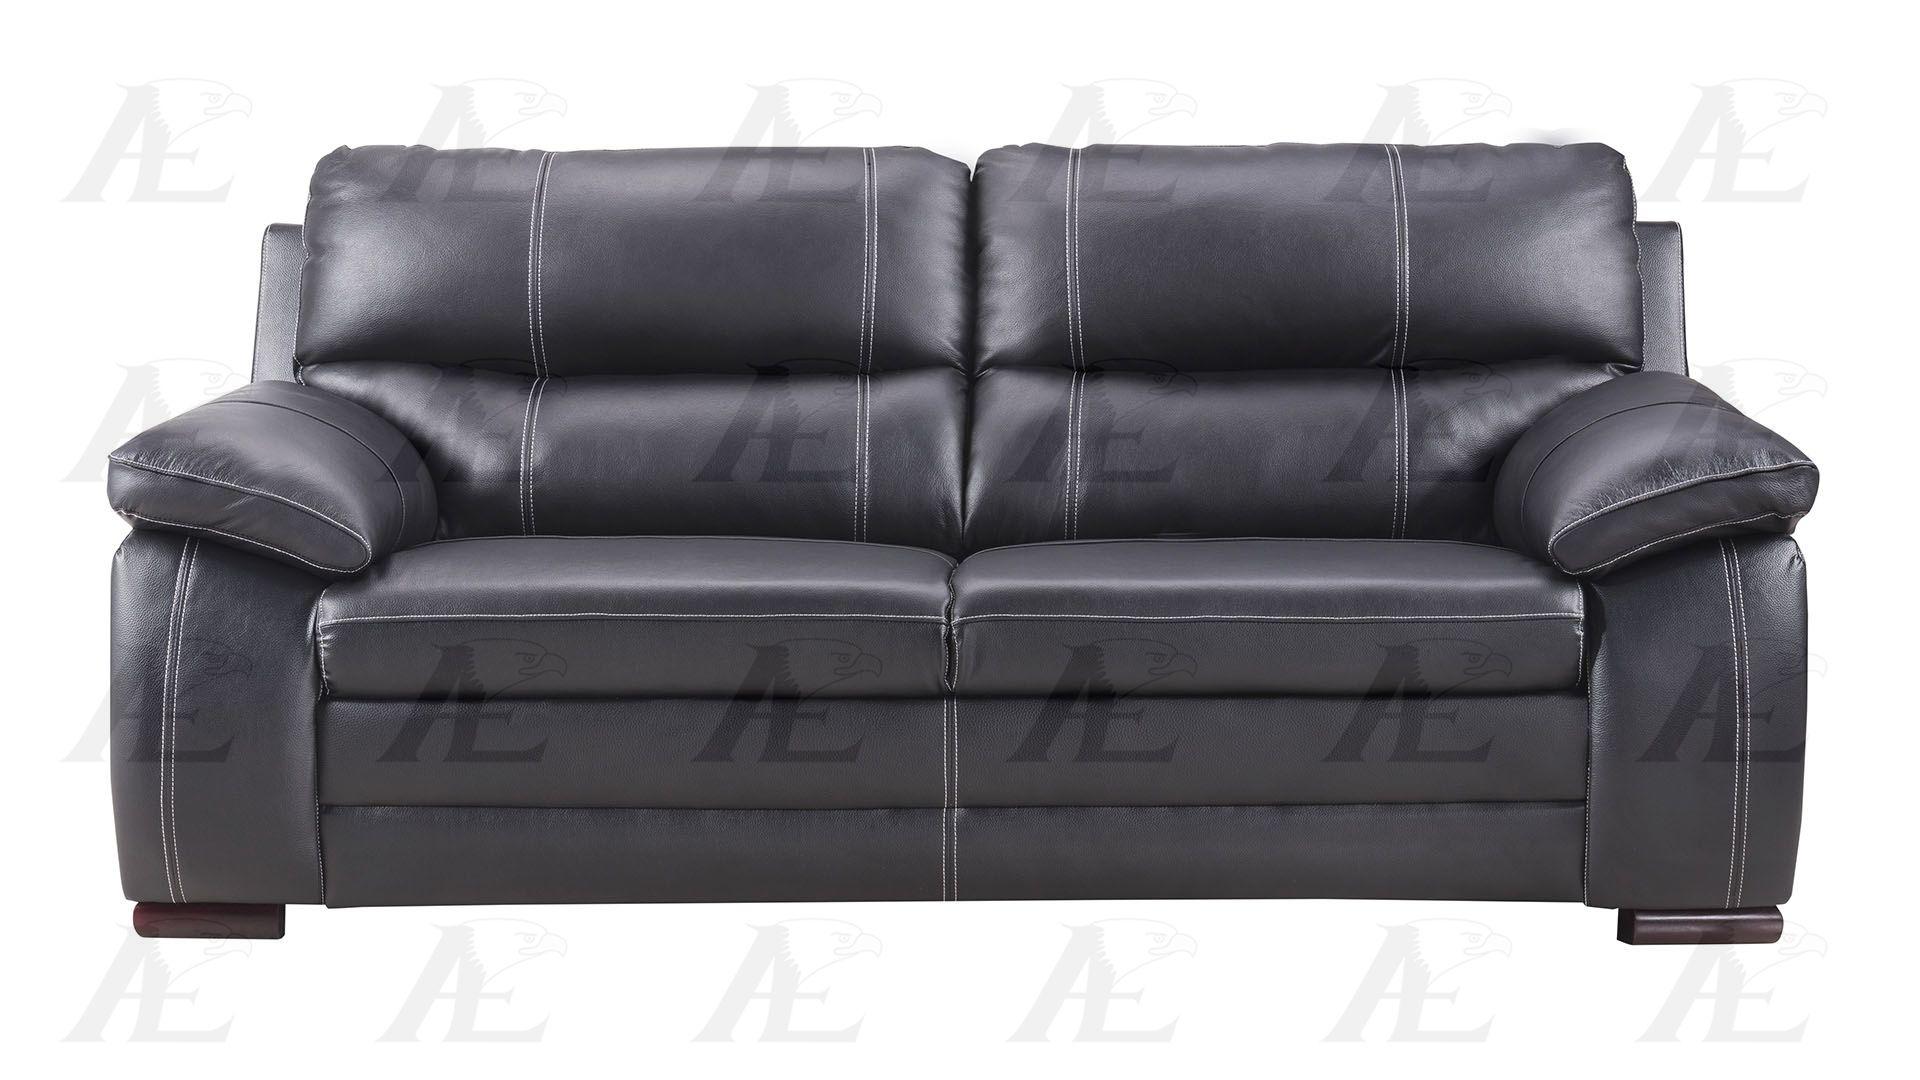 

    
American Eagle Furniture EK-B520-BK Modern Black Sofa & Loveseat Genuine Leather 2Pcs Set
